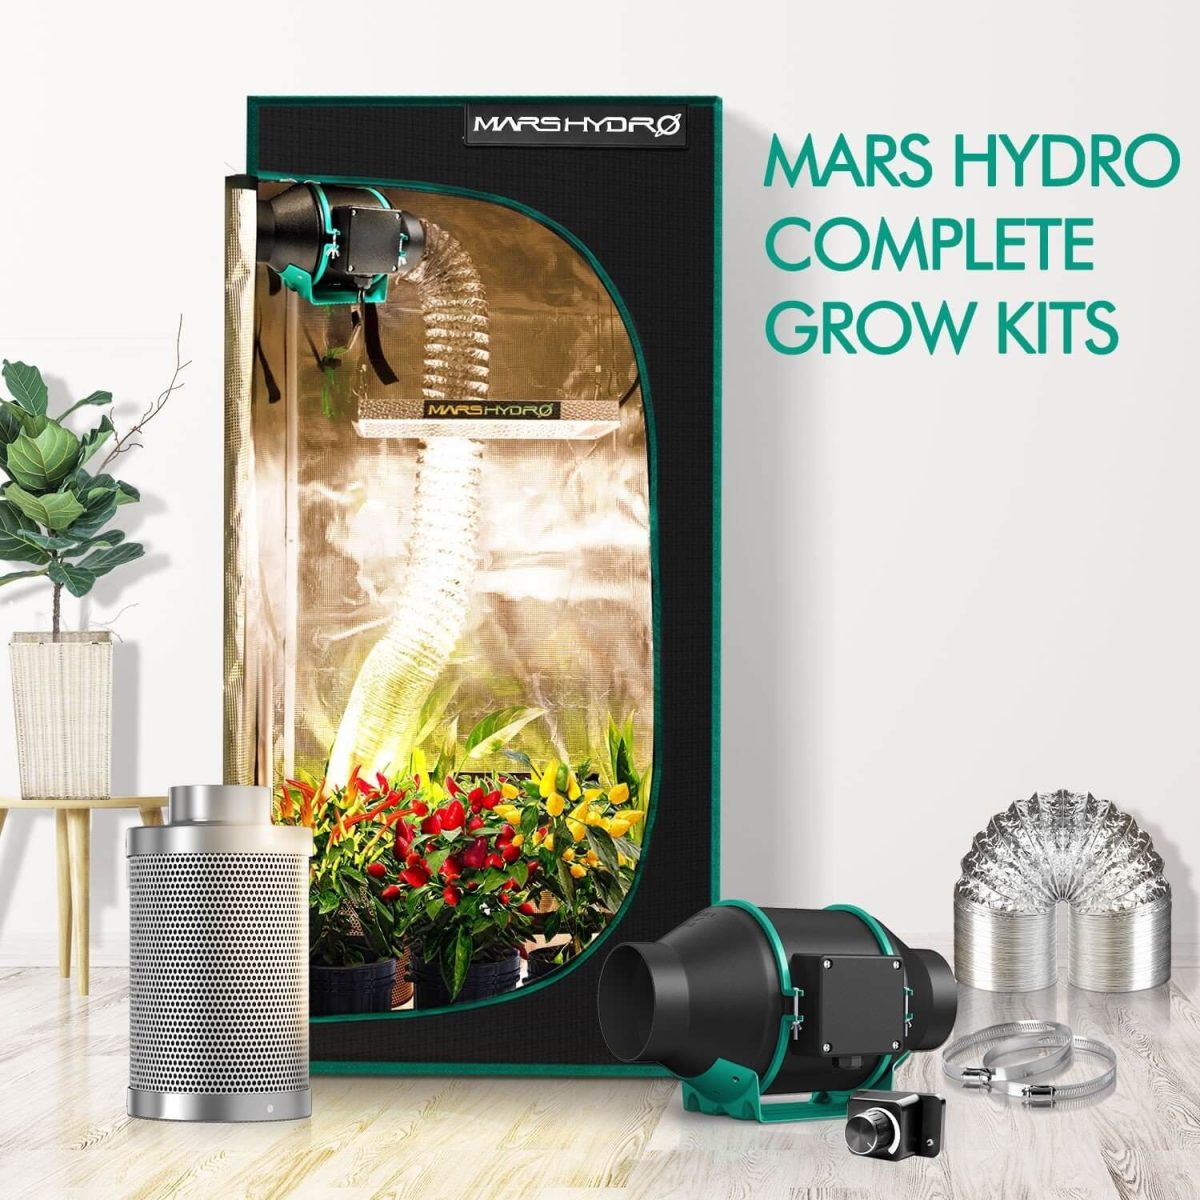 Mars Hydro 2'x2' complete grow tent kits, the best grow kits to start grow.